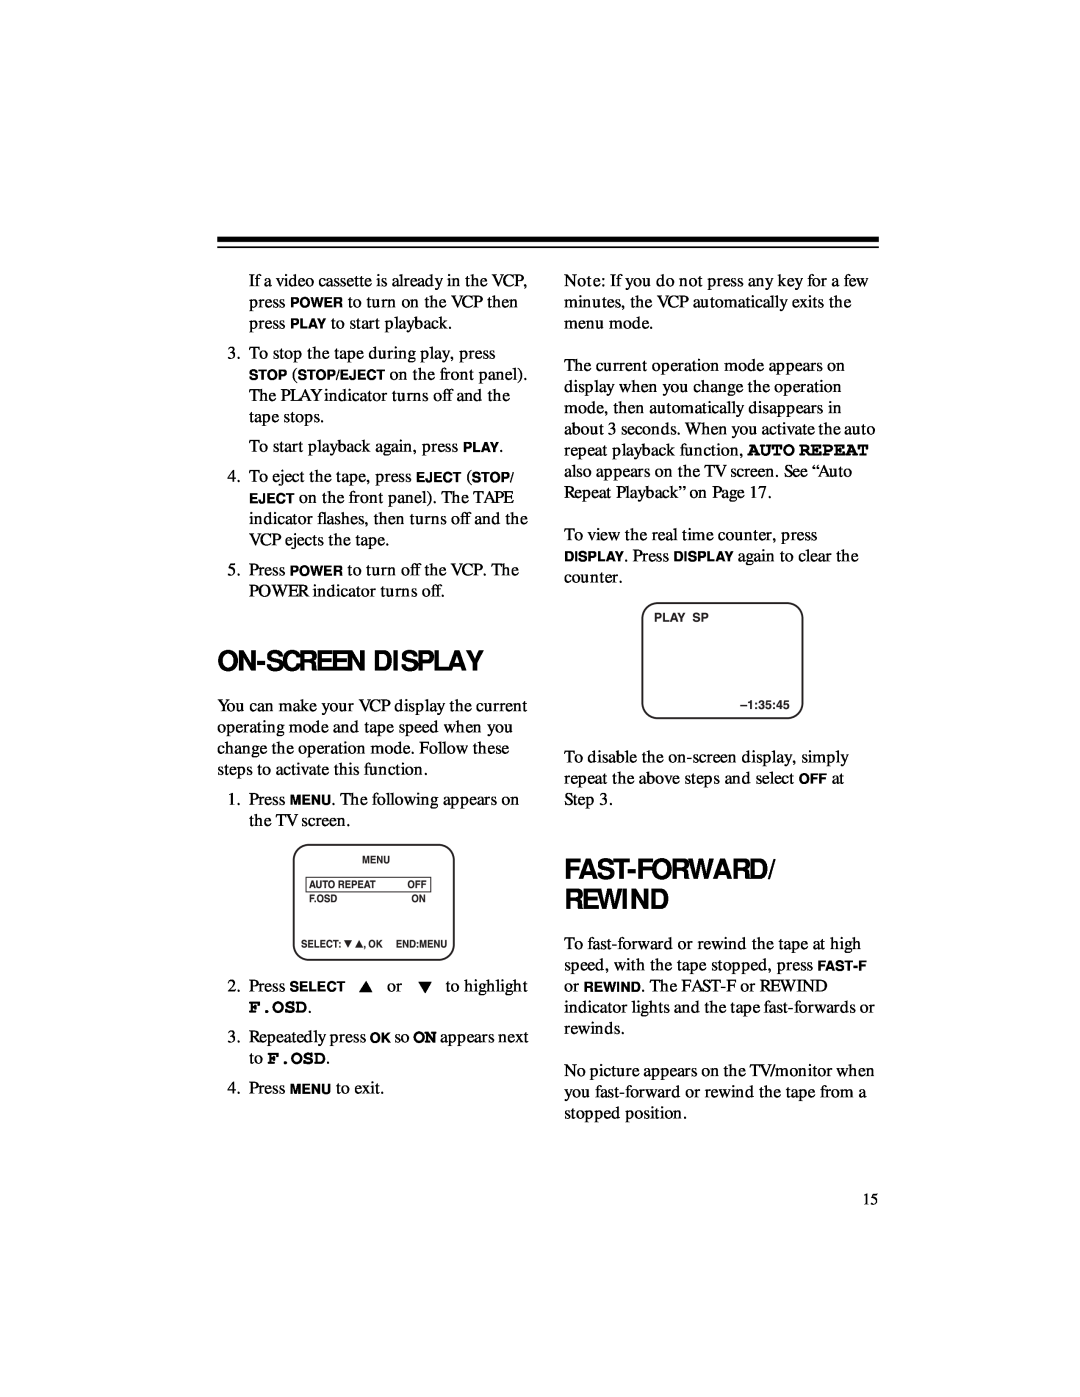 RCA 40, 50 owner manual On-Screendisplay, Fast-Forward Rewind, F.Osd 